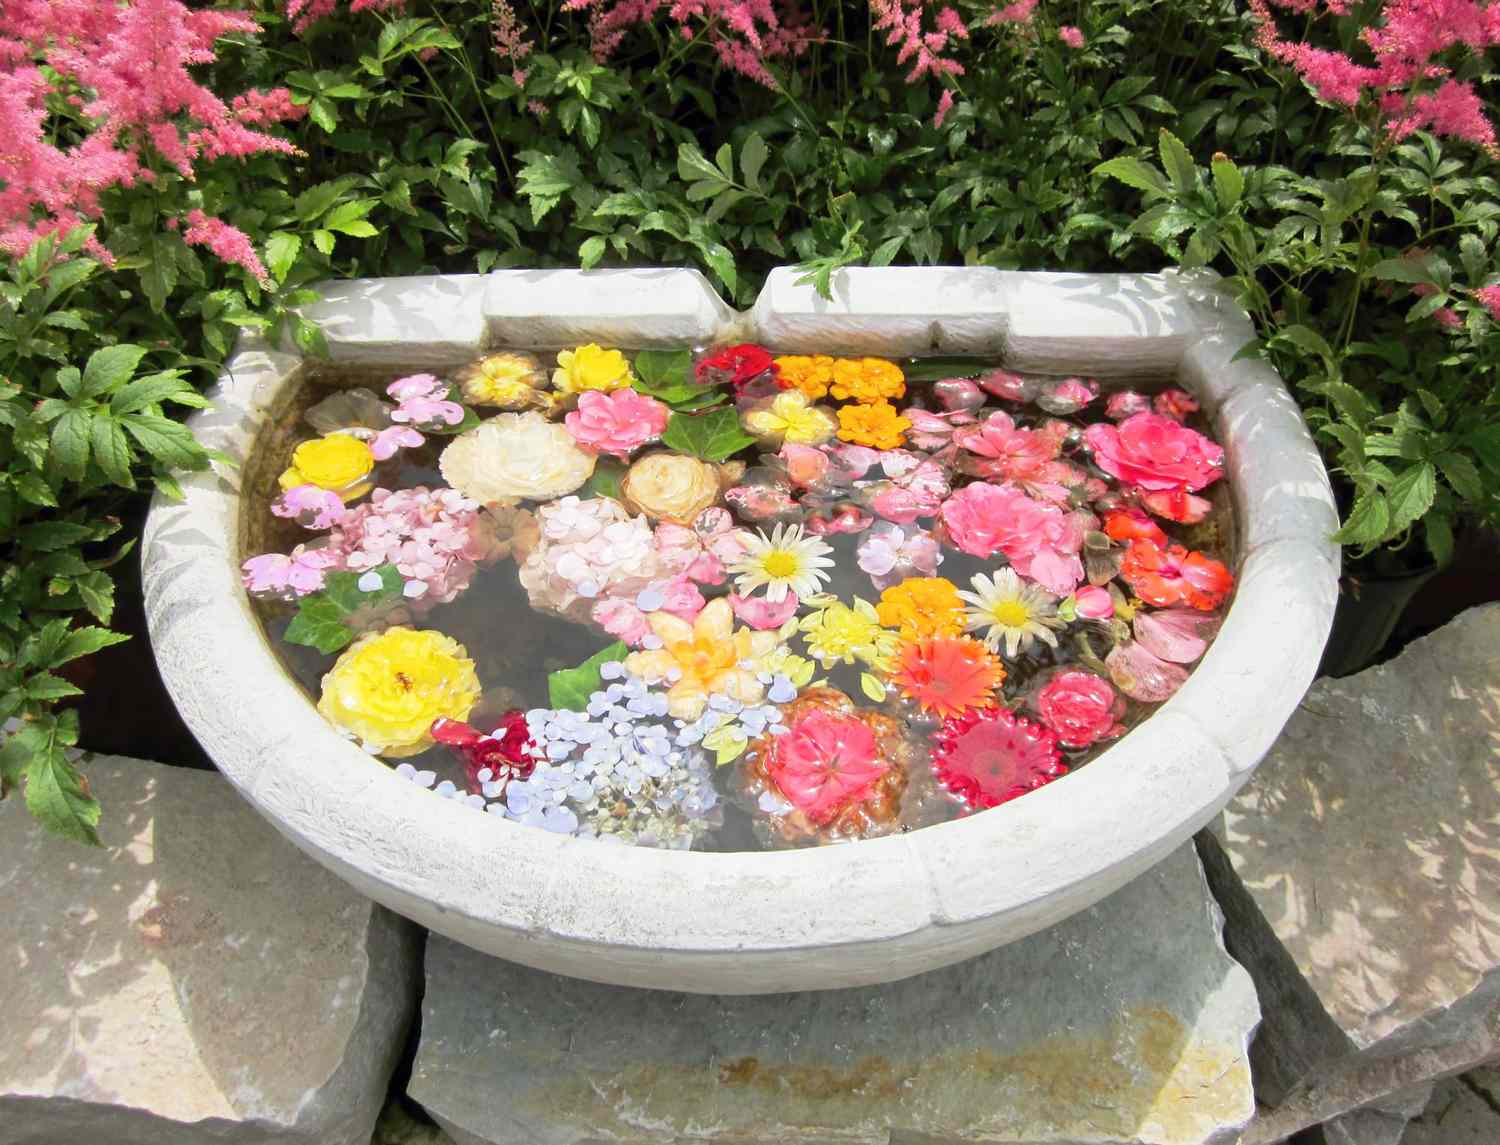 Garden birdbath filled with colorful flower petals